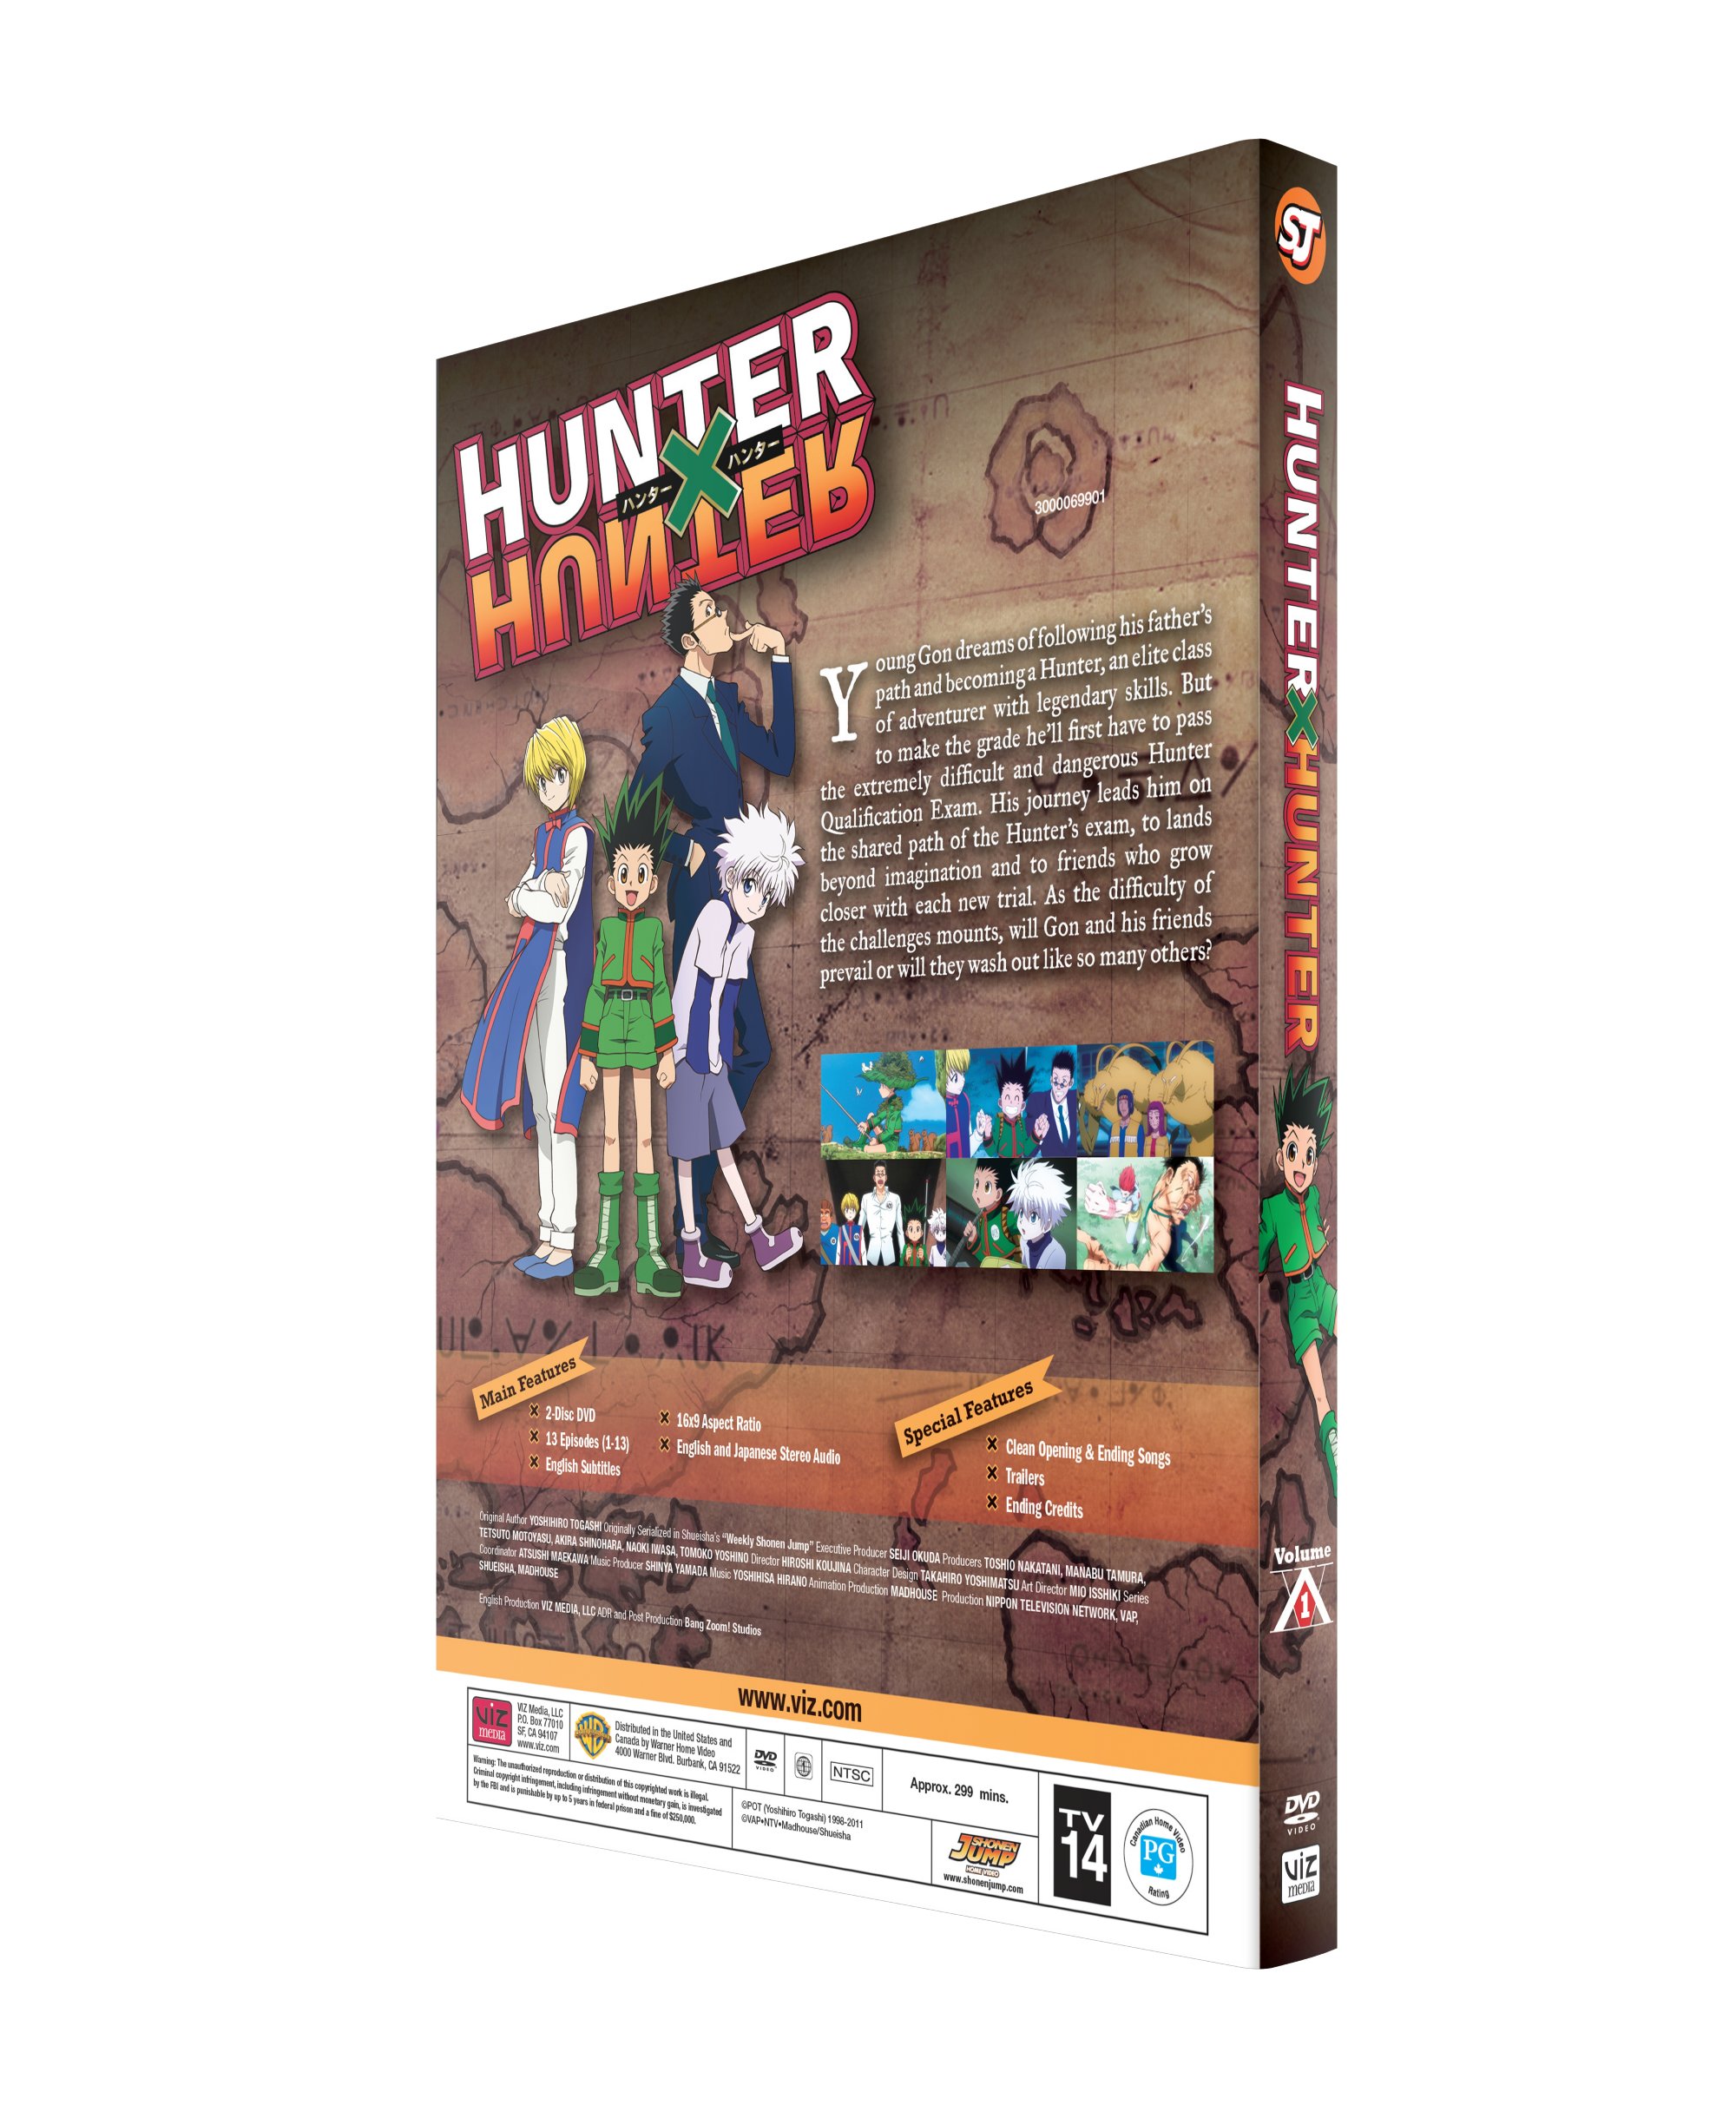 Re:JACK by Crunchyroll #01: Hunter x Hunter (Exame Hunter